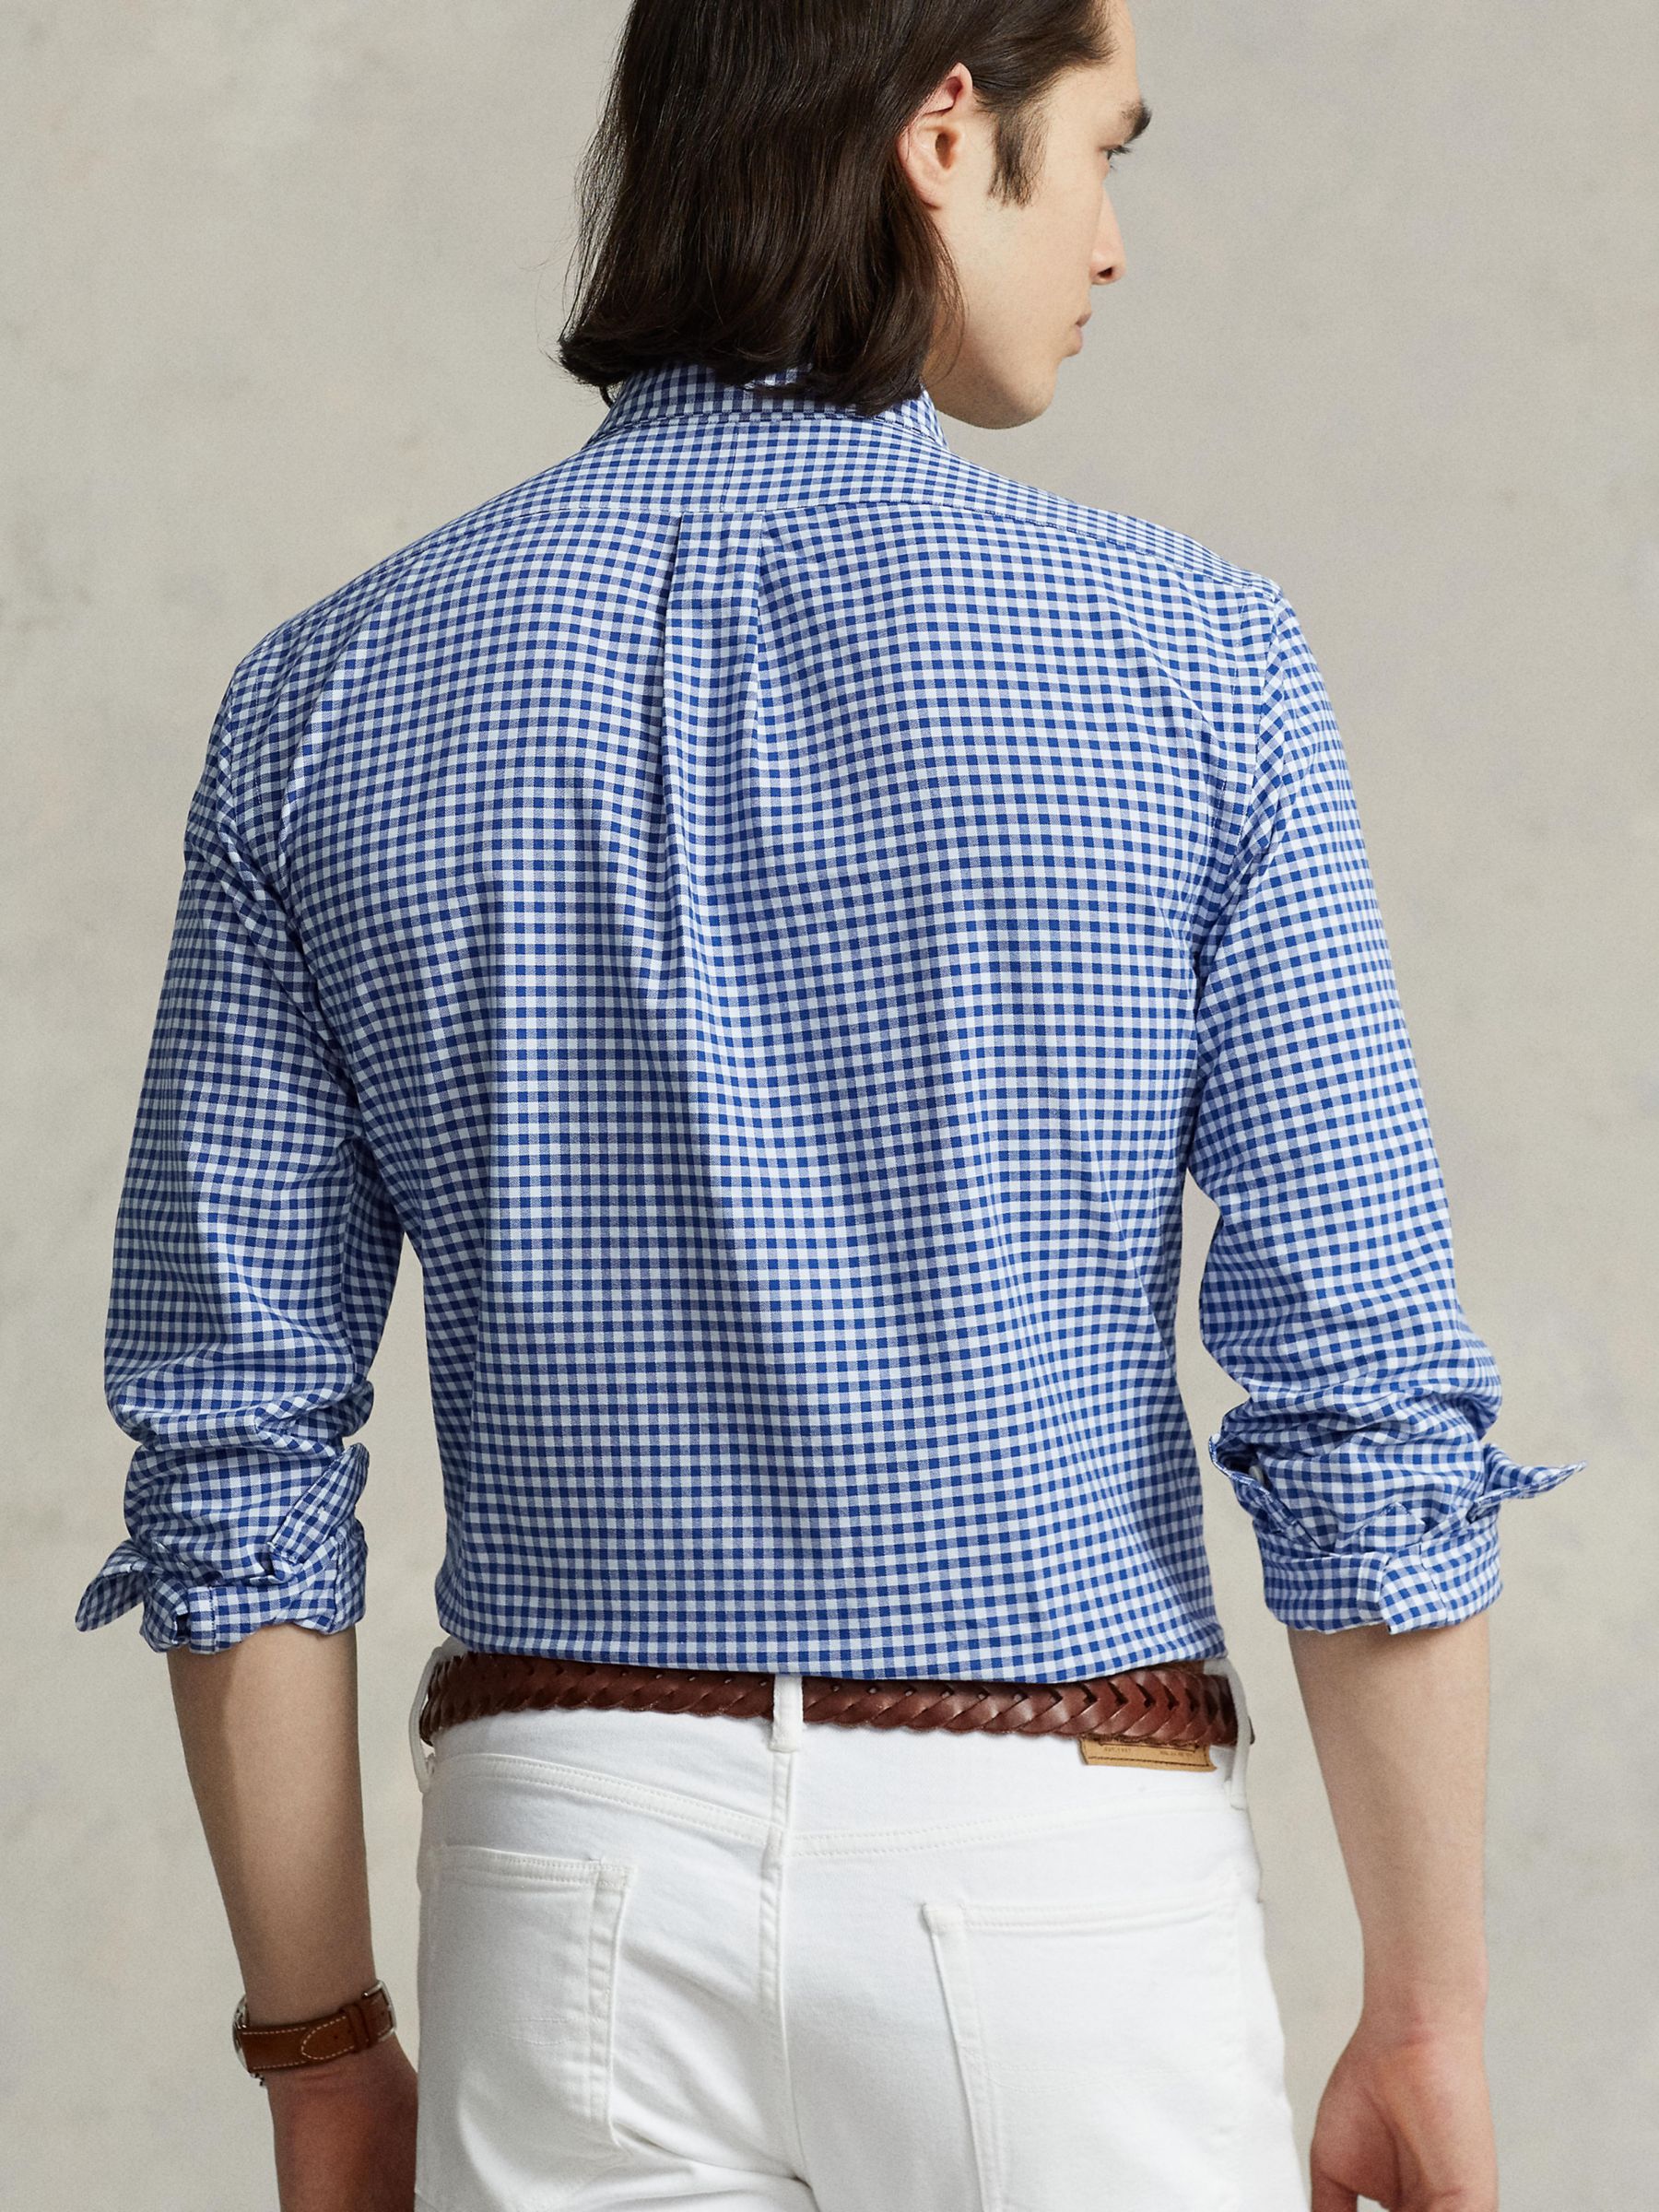 ralph lauren blue and white checkered shirt